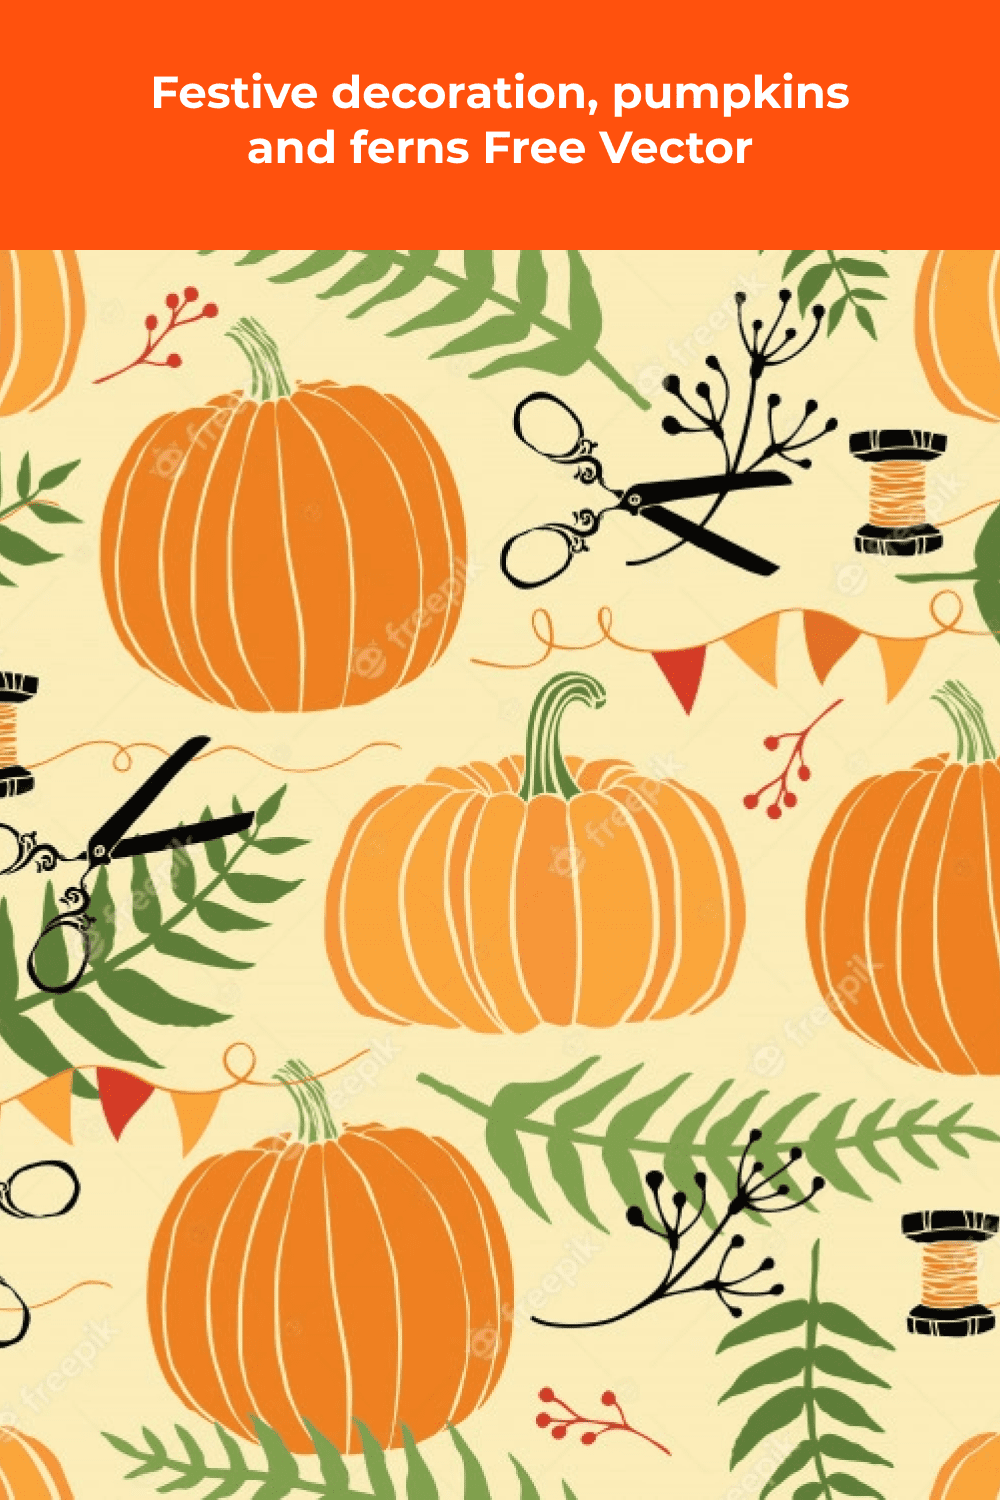 Lovely autumn illustration with ethnic style pumpkins.